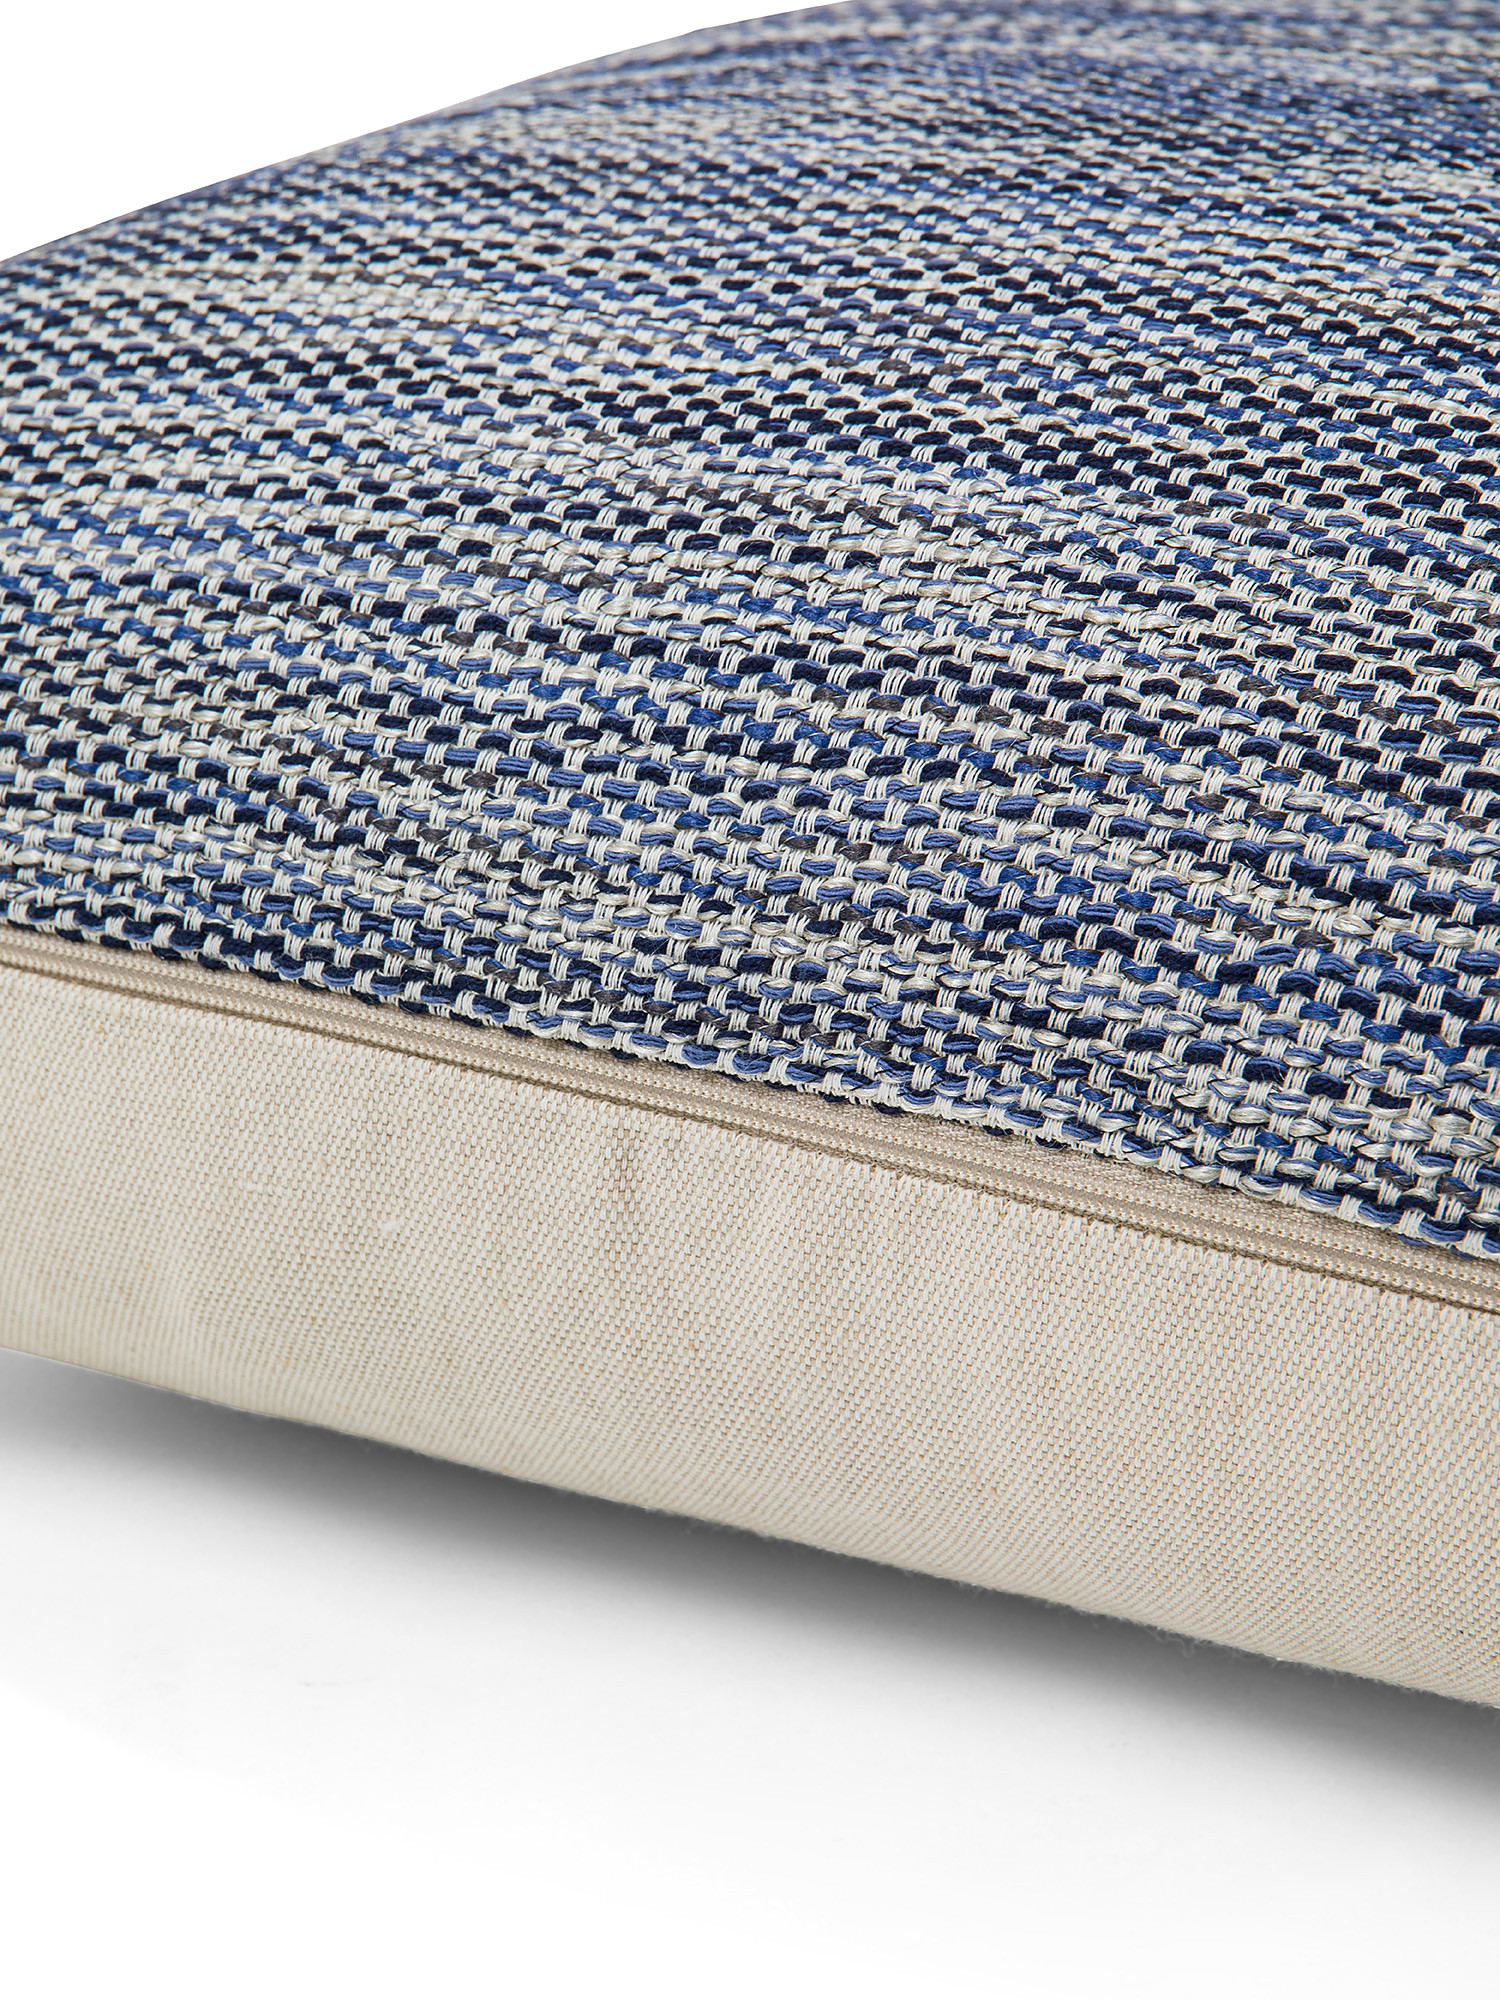 Cushion 45x45 cm with fringes, Blue, large image number 2